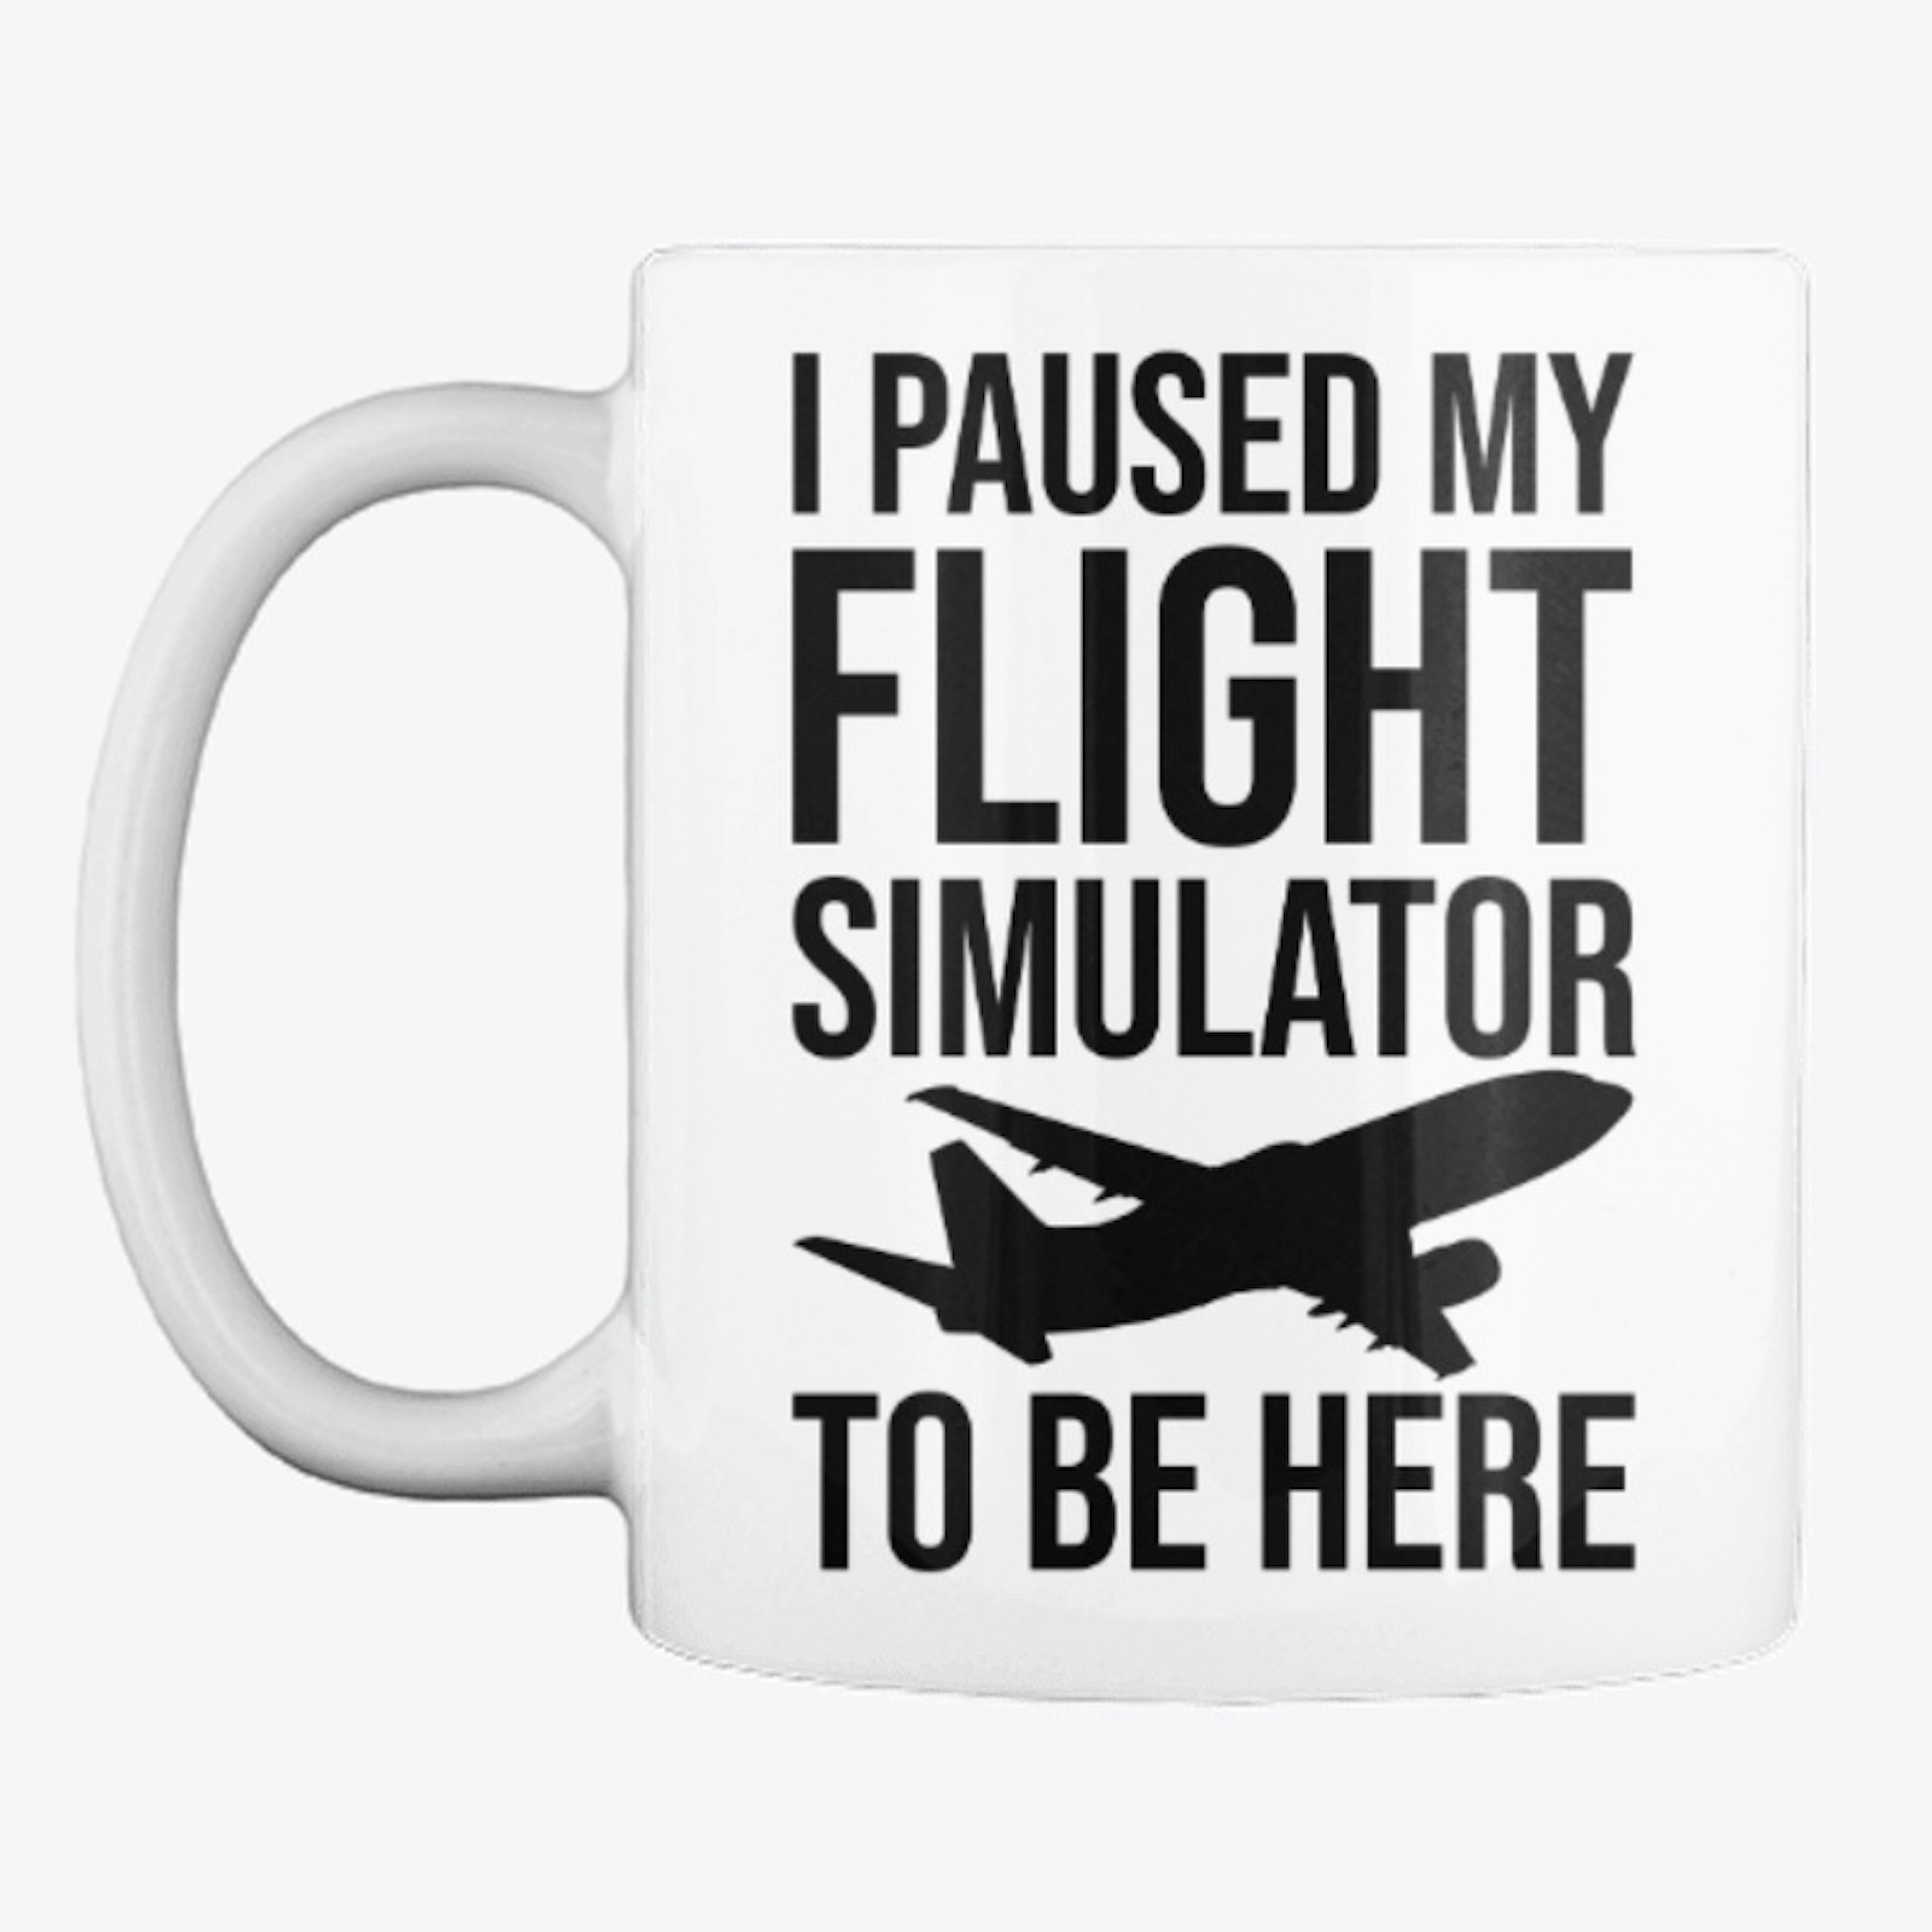 I paused my flight simulator to be here